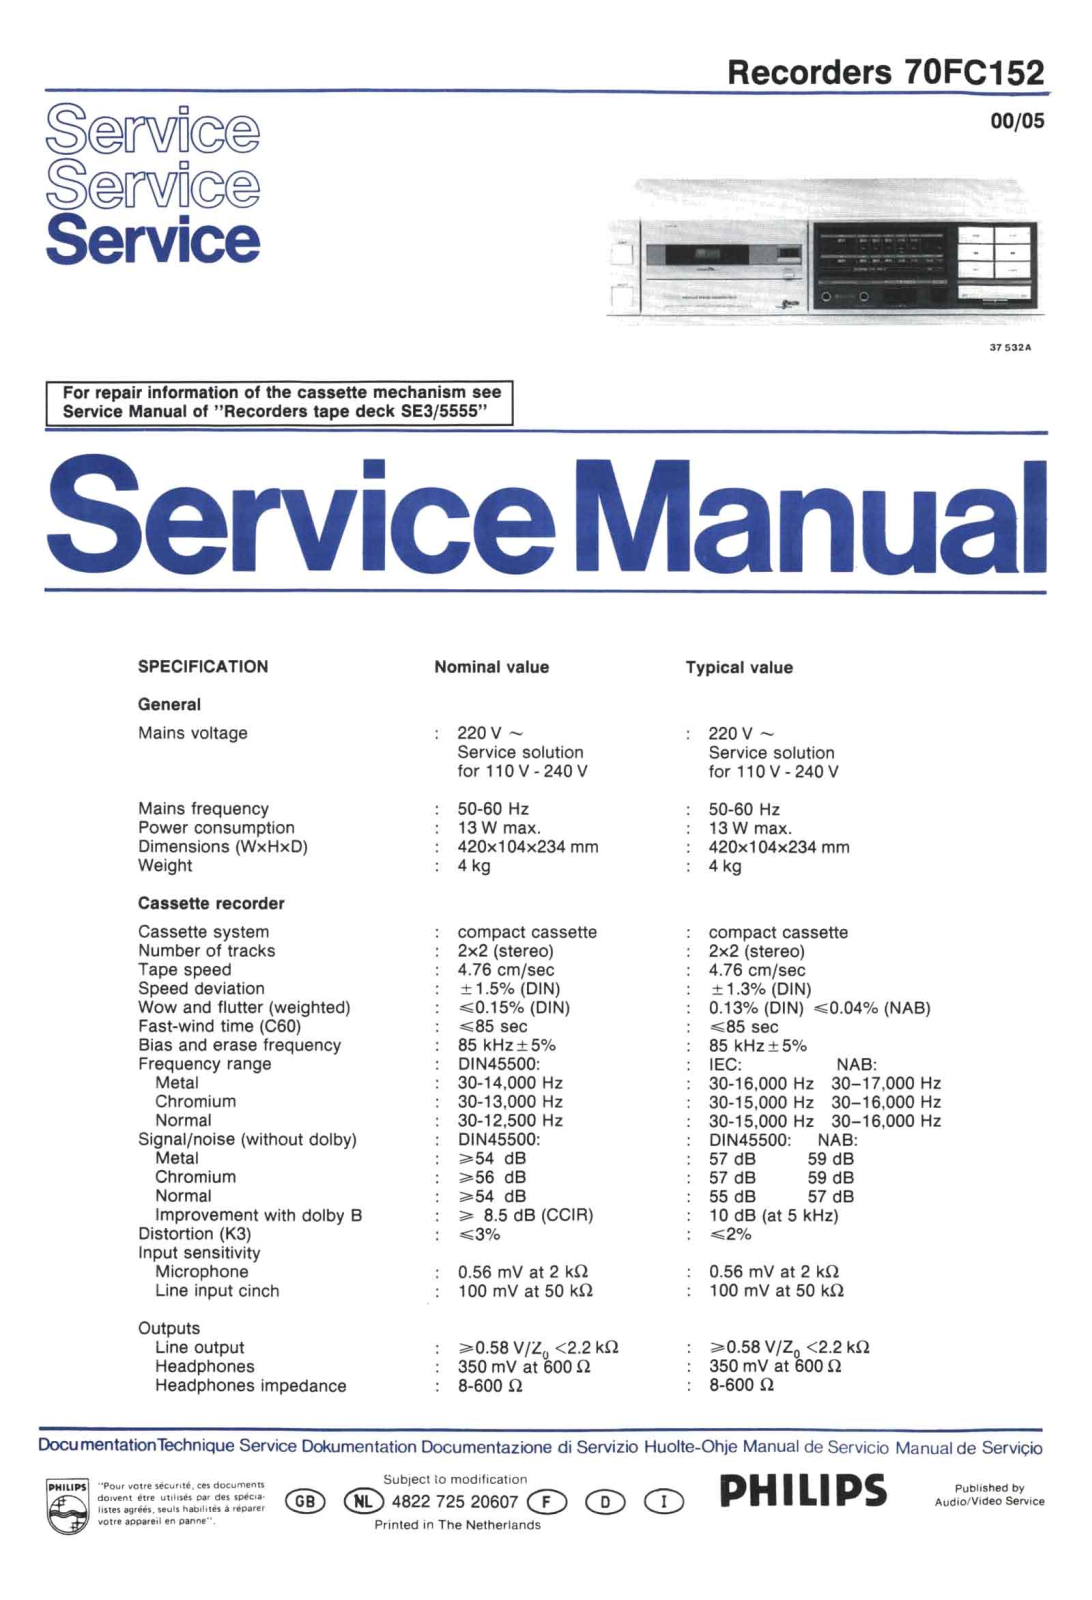 Philips FC-152 Service Manual